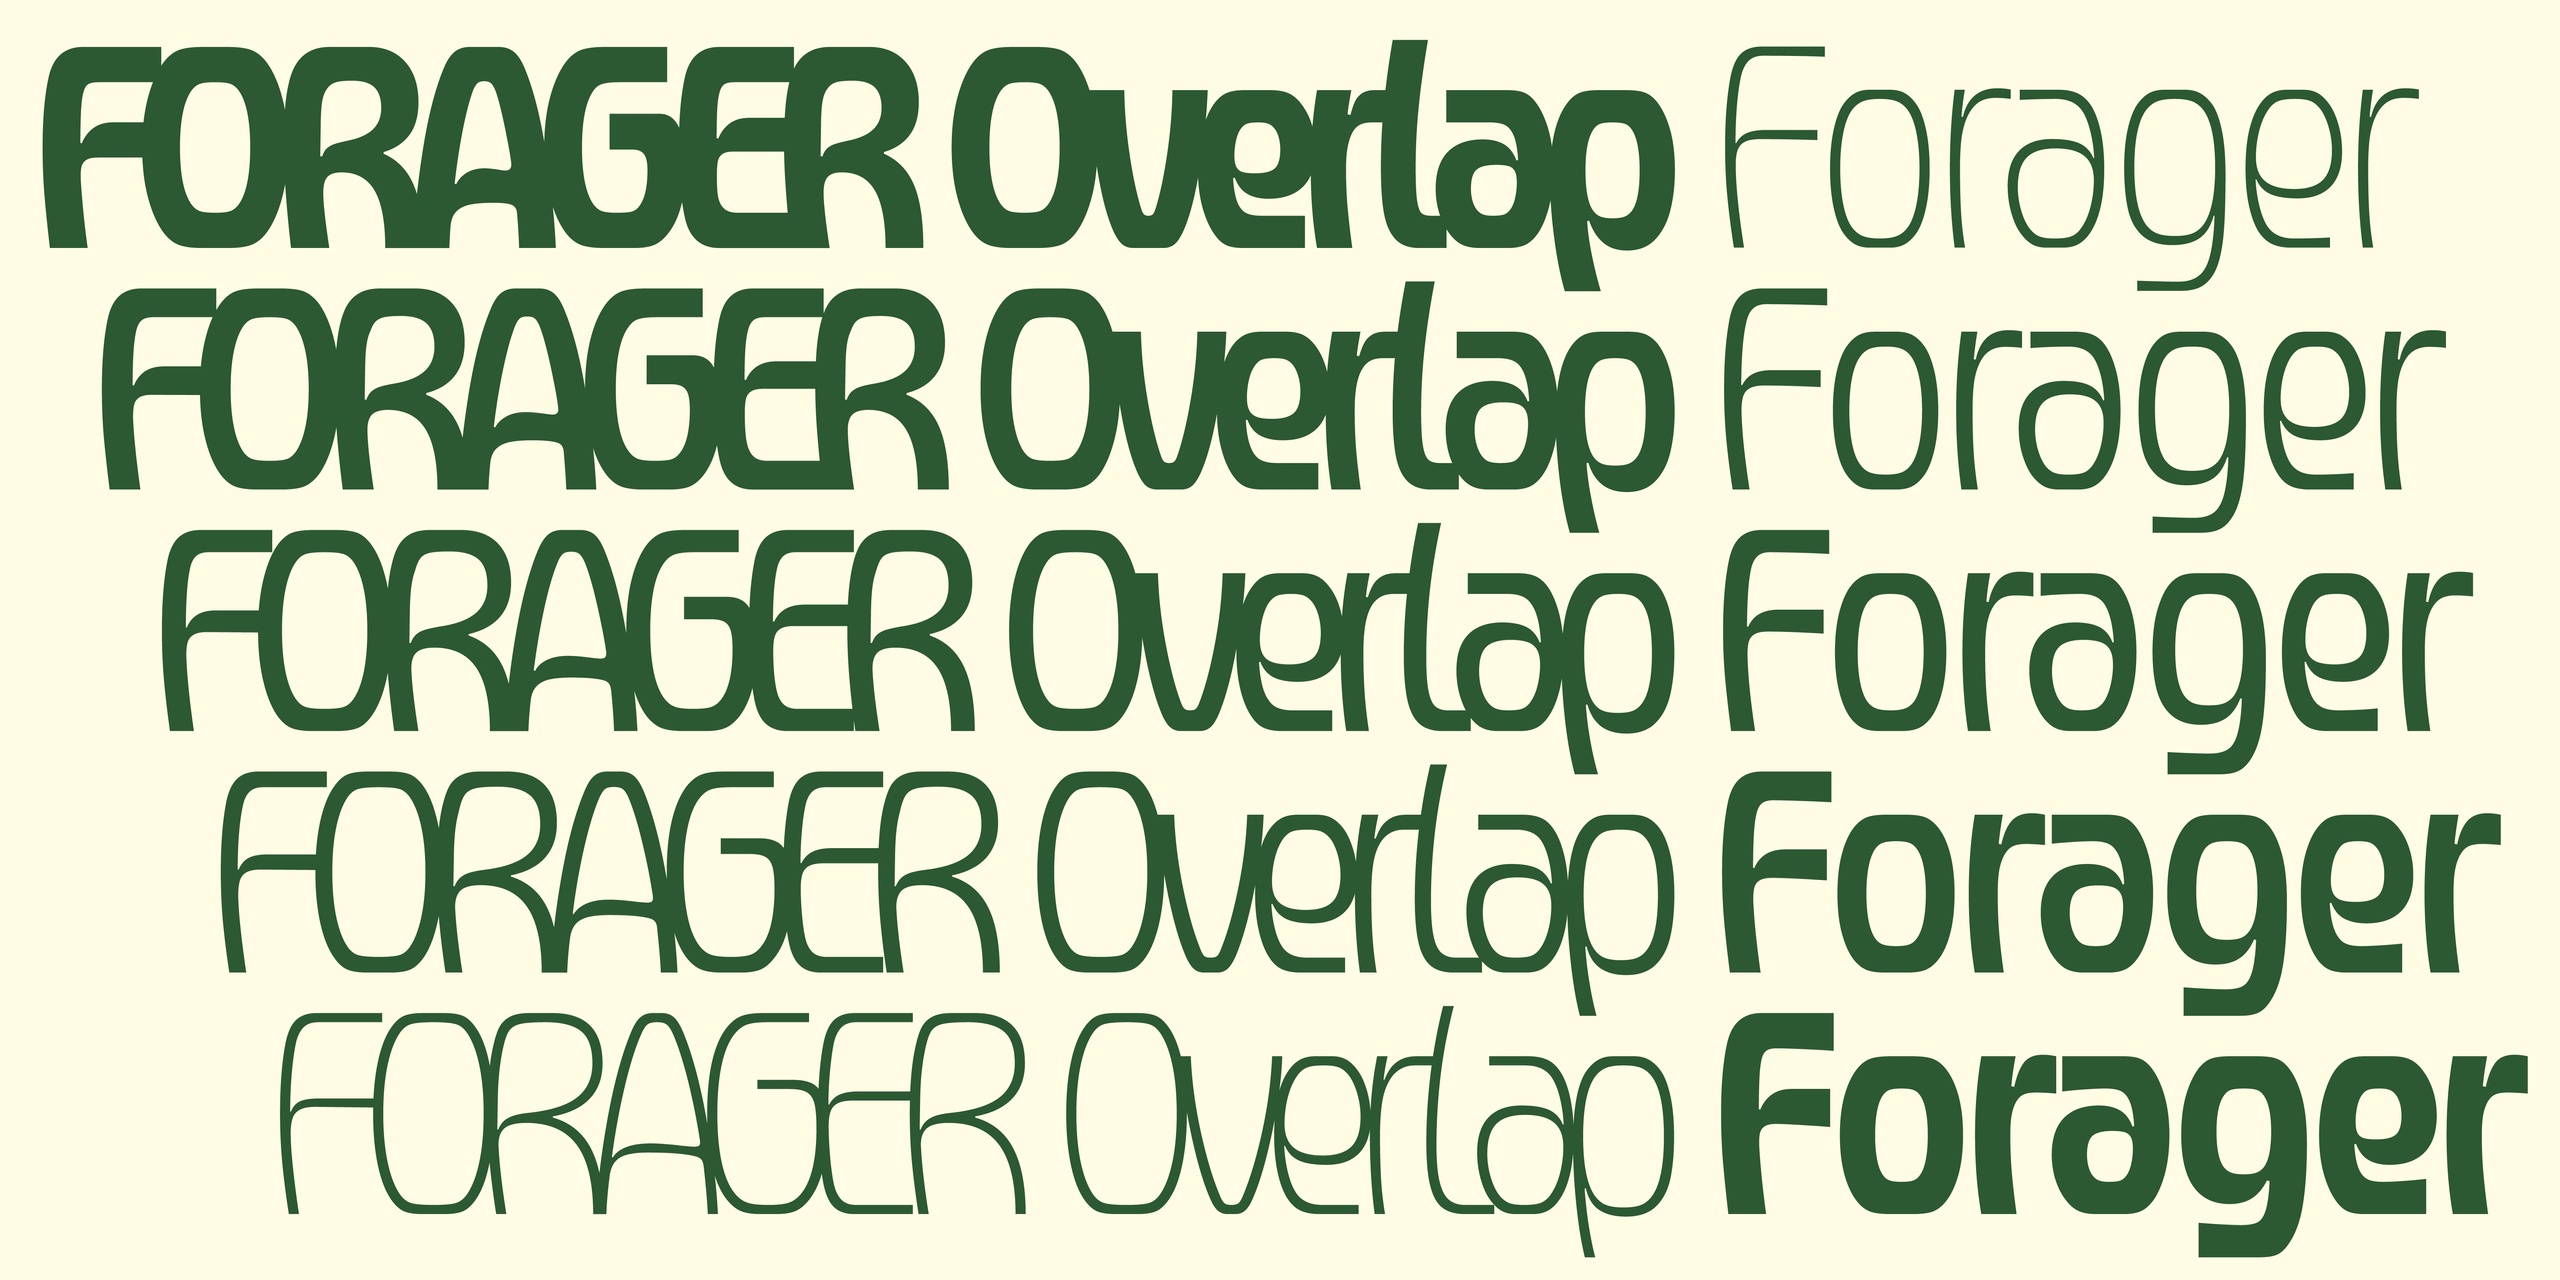 Пример шрифта Forager Regular Overlap